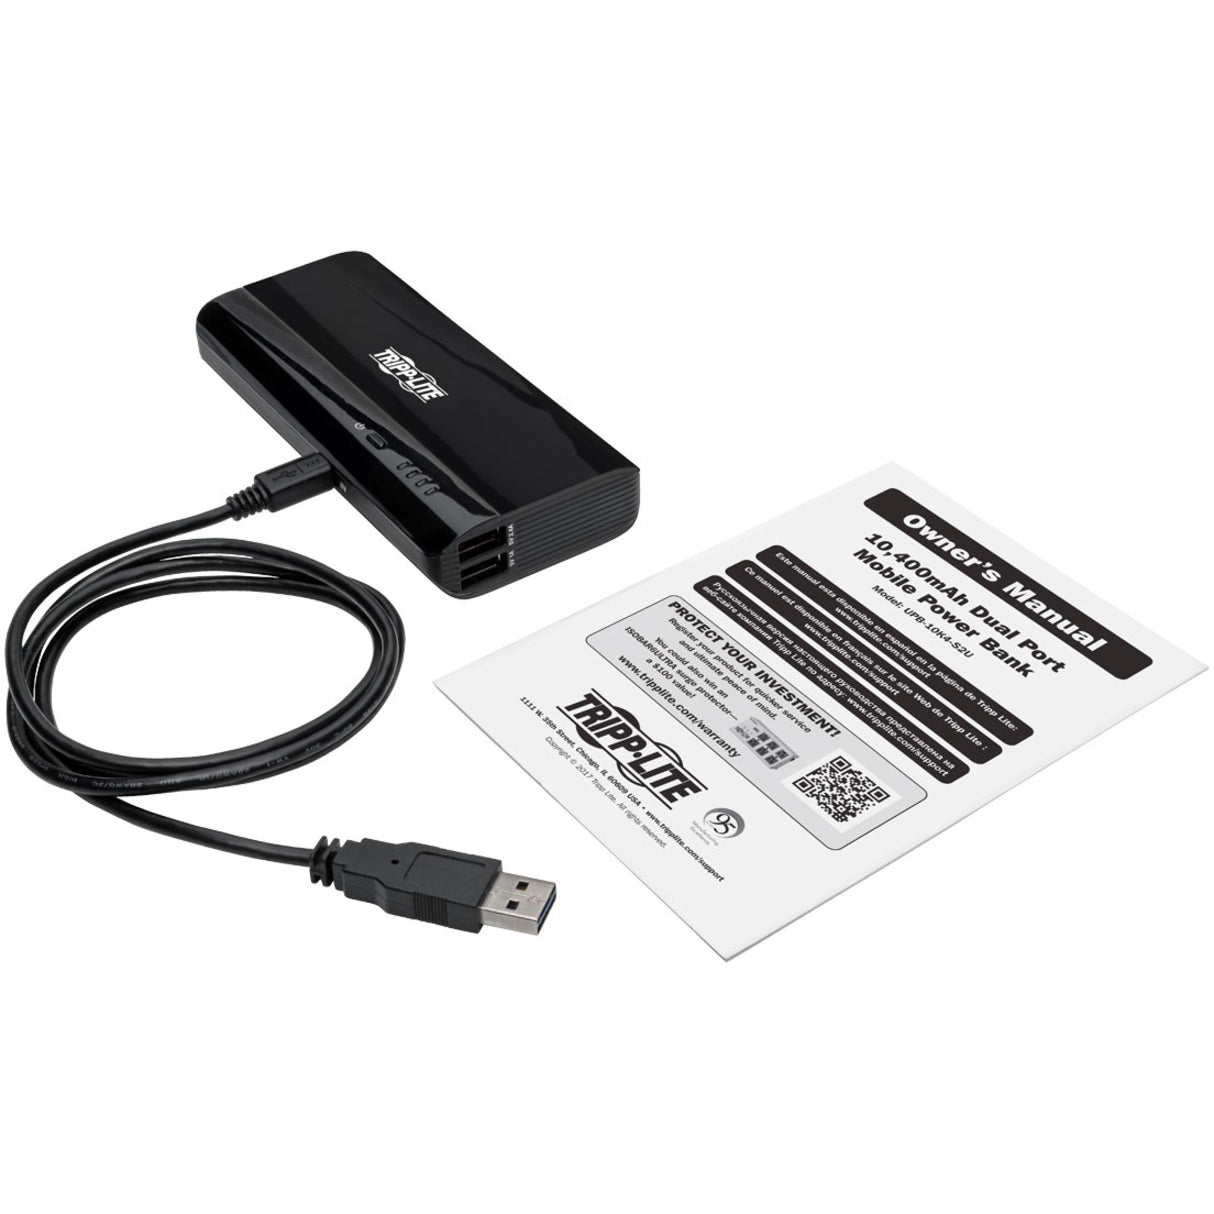 Tripp Lite UPB-10K4-S2U Power Bank, USB Battery Charger Mobile Power Bank 10.4K mAh w/ Auto-Sensing